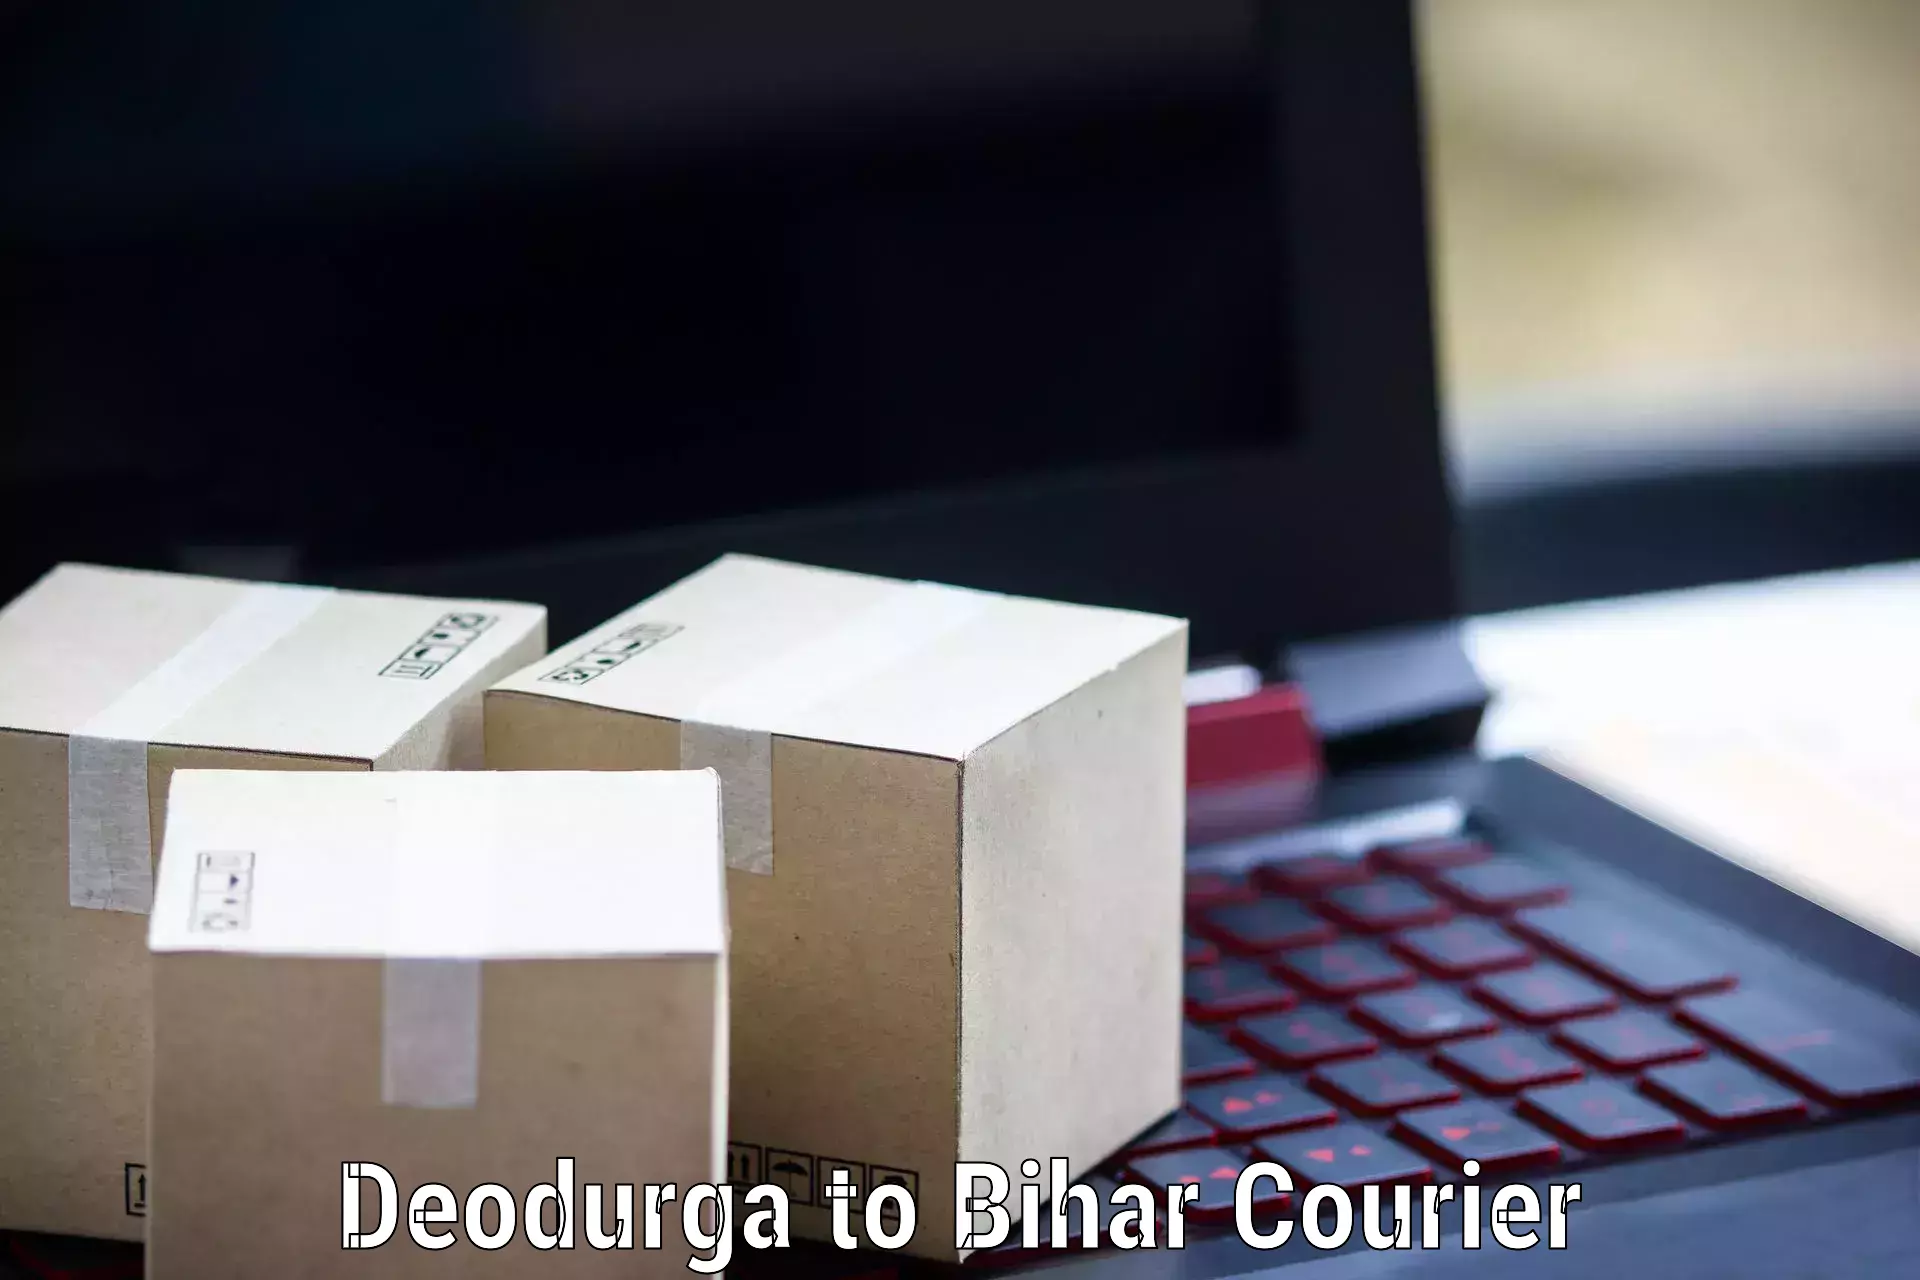 Express delivery network Deodurga to Vaishali